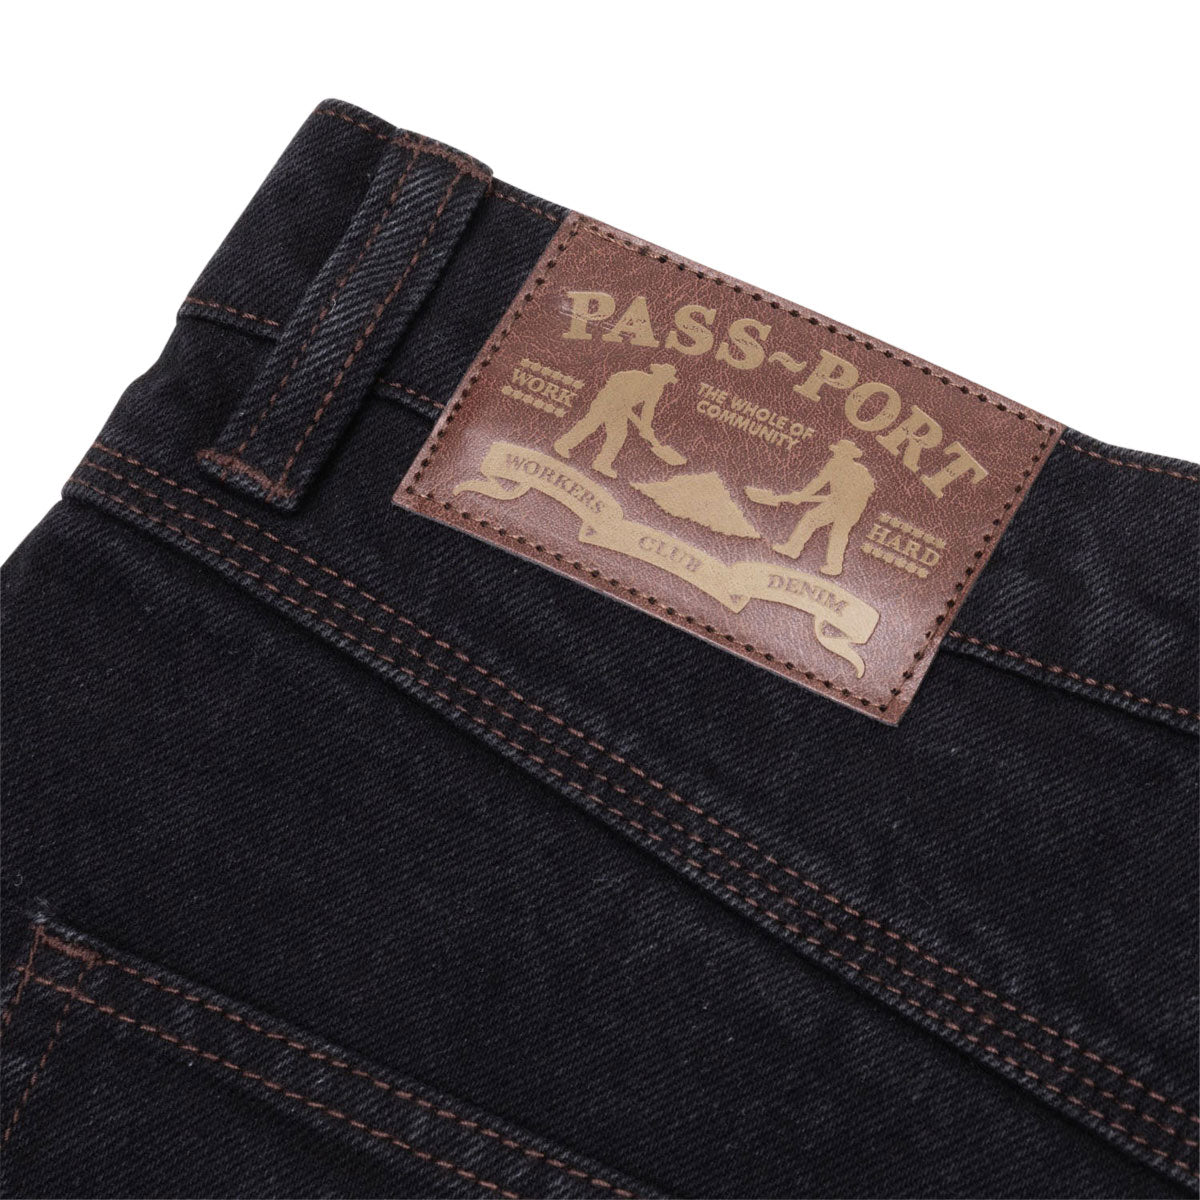 Passport Denim Workers Club R41 Shorts - Washed Black image 4